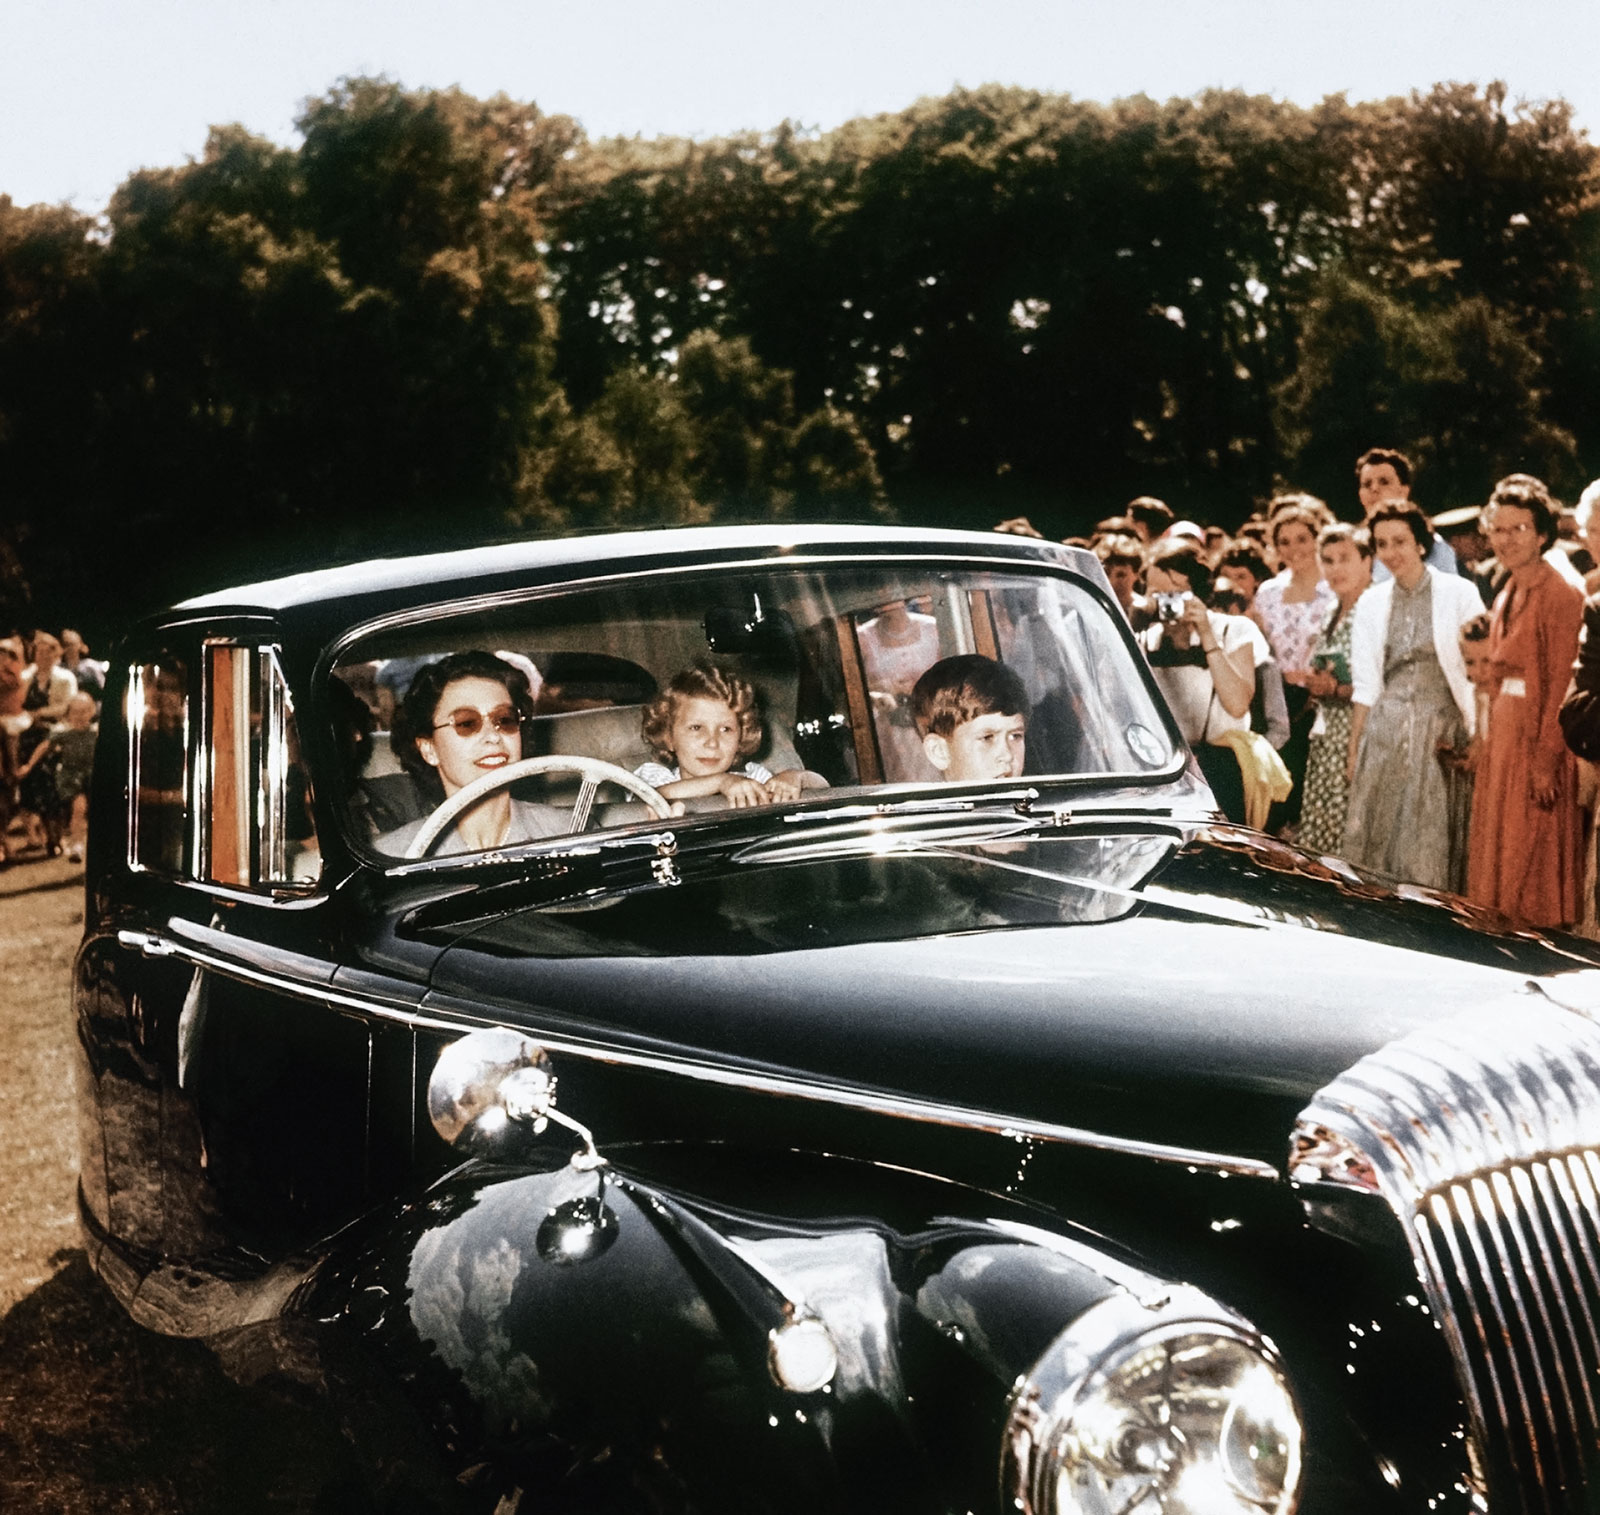  Bettmann/Corbis // Caption: Οδηγώντας στο Windsor με τα δυο της παιδιά στο πίσω κάθισμα της πολυτελούς της Daimler, 1957 // Photo: ανώνυμος 